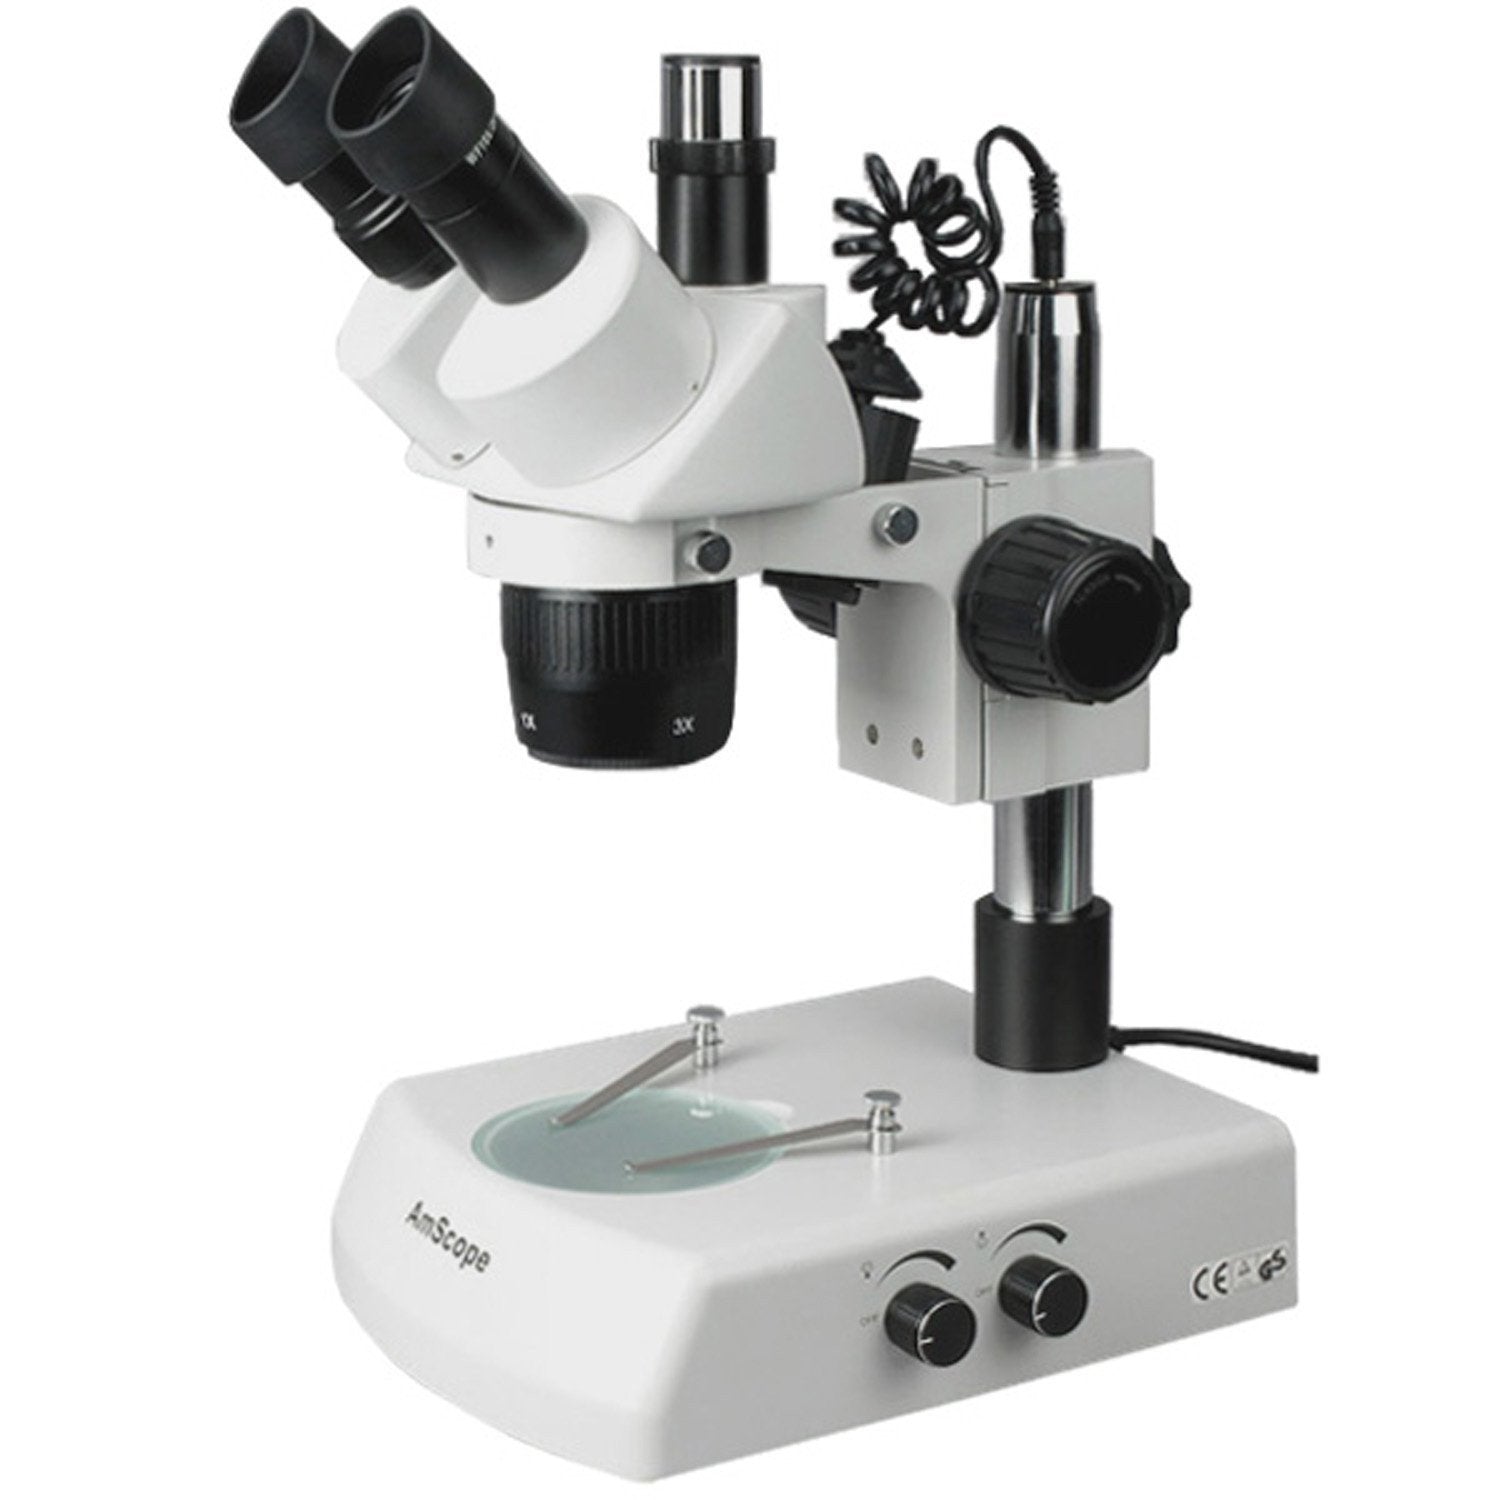 AmScope 10X-30X Trinocular Stereo Microscope with Top & Bottom Halogen Lights